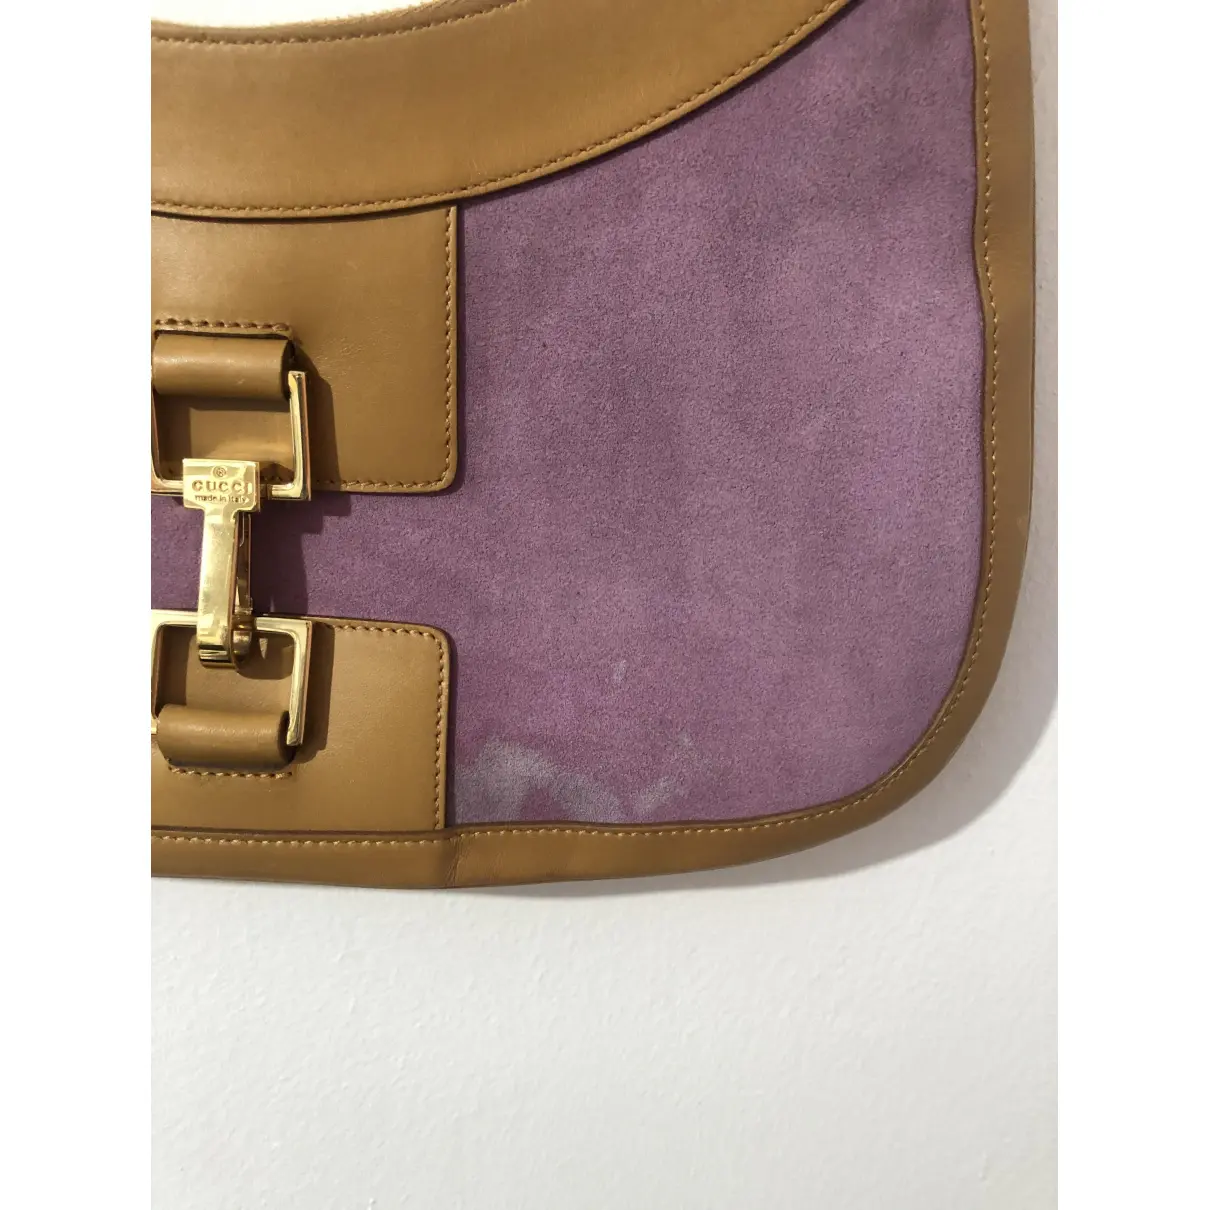 Buy Gucci Jackie Vintage  handbag online